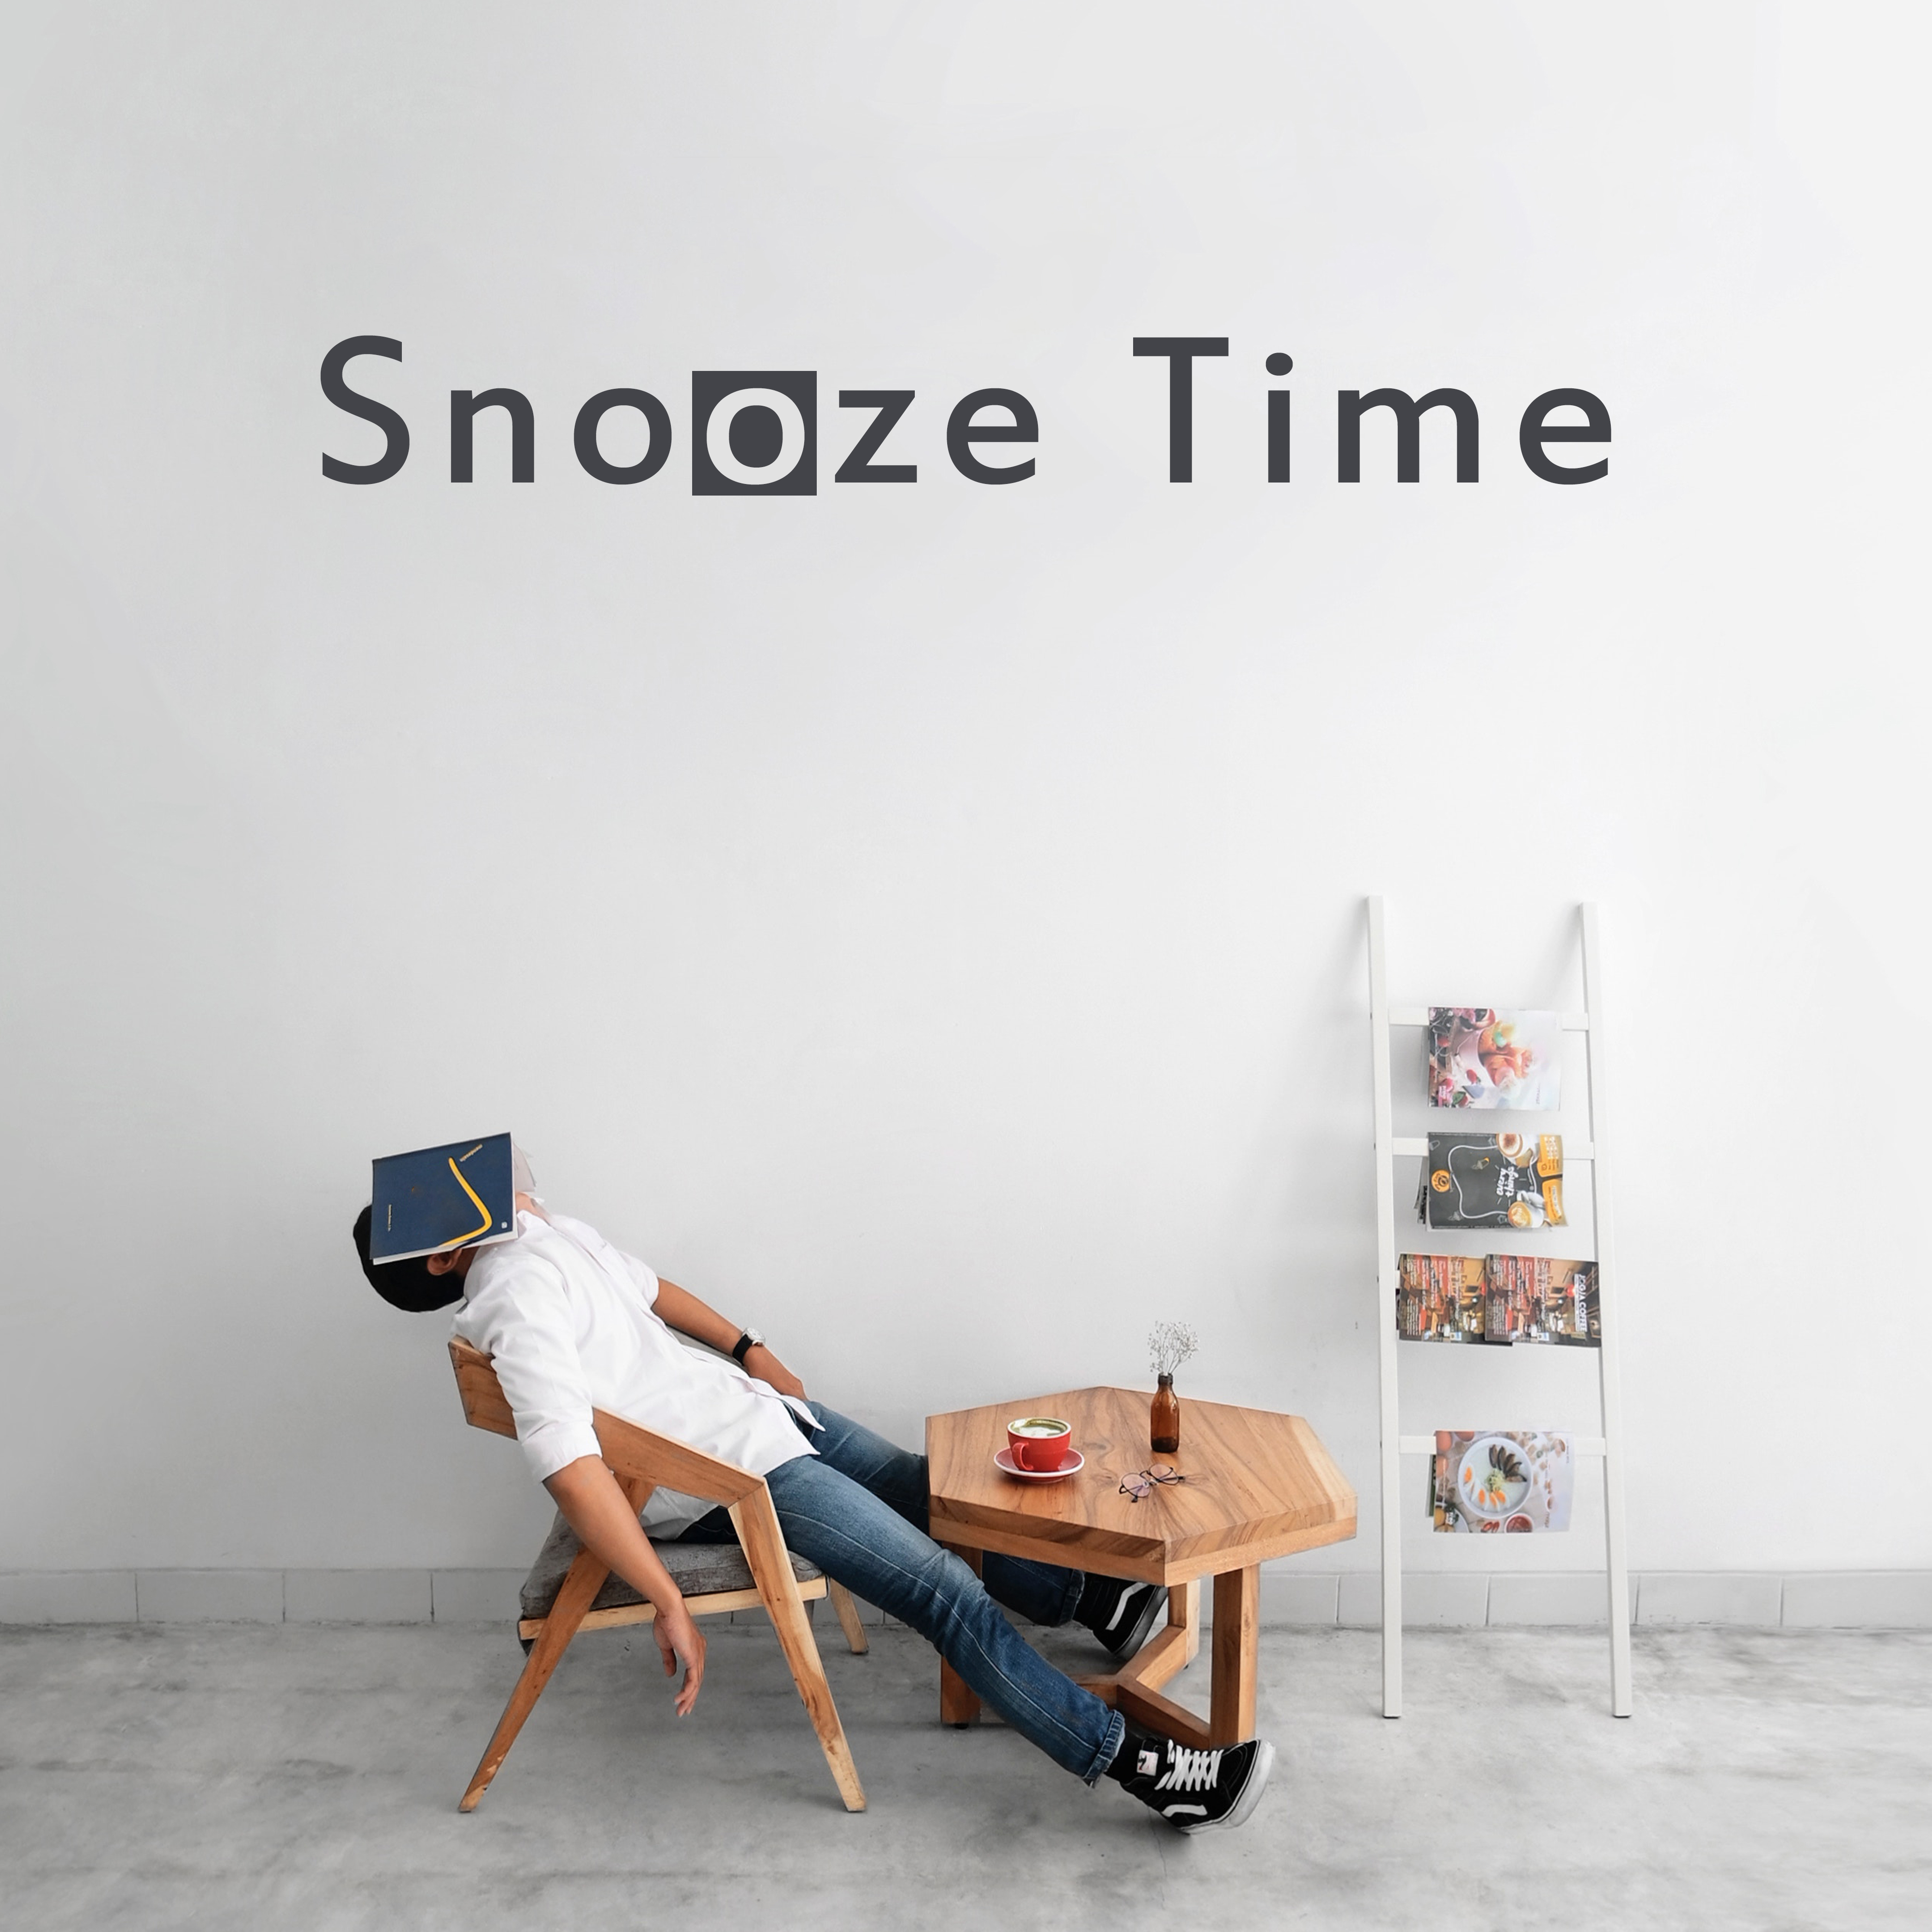 Snooze Time: Helpful Music to Fall Asleep